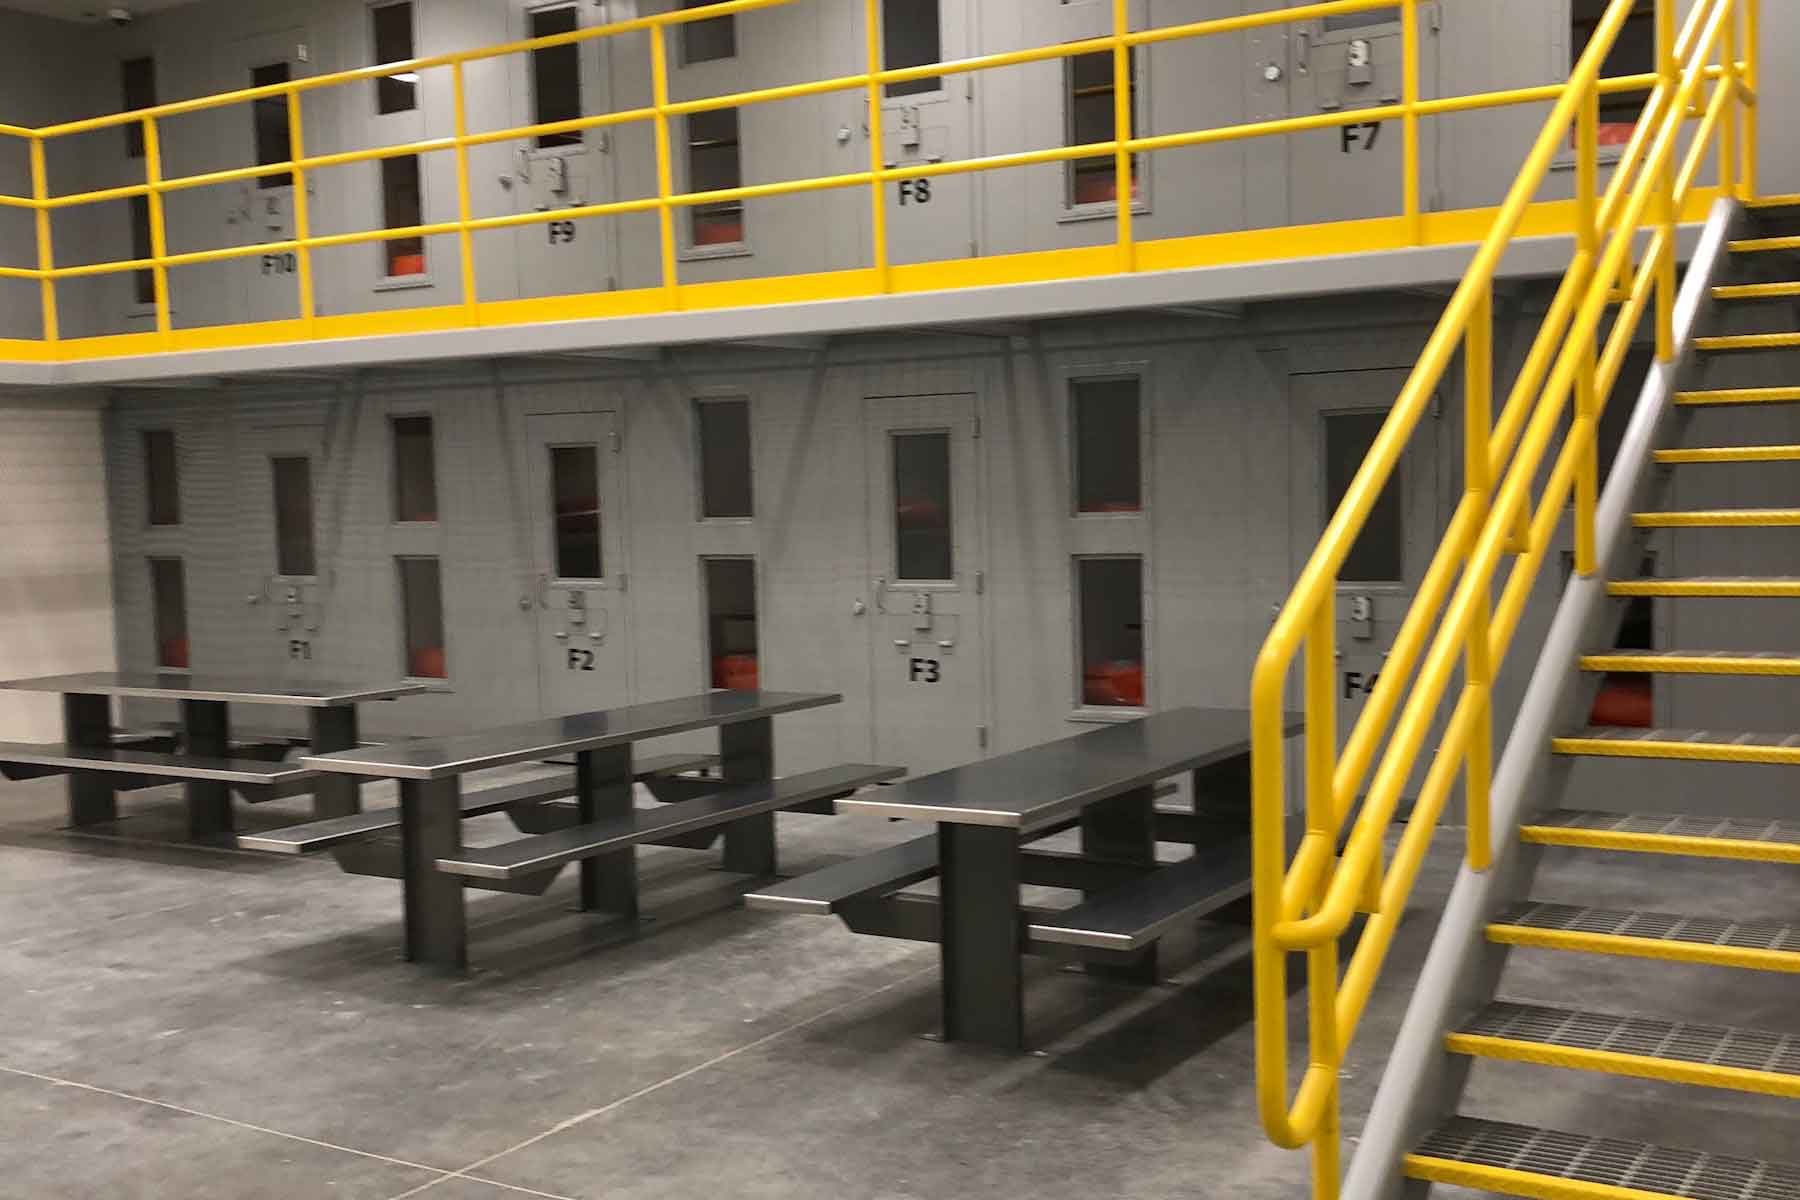 Jail Interior During Construction